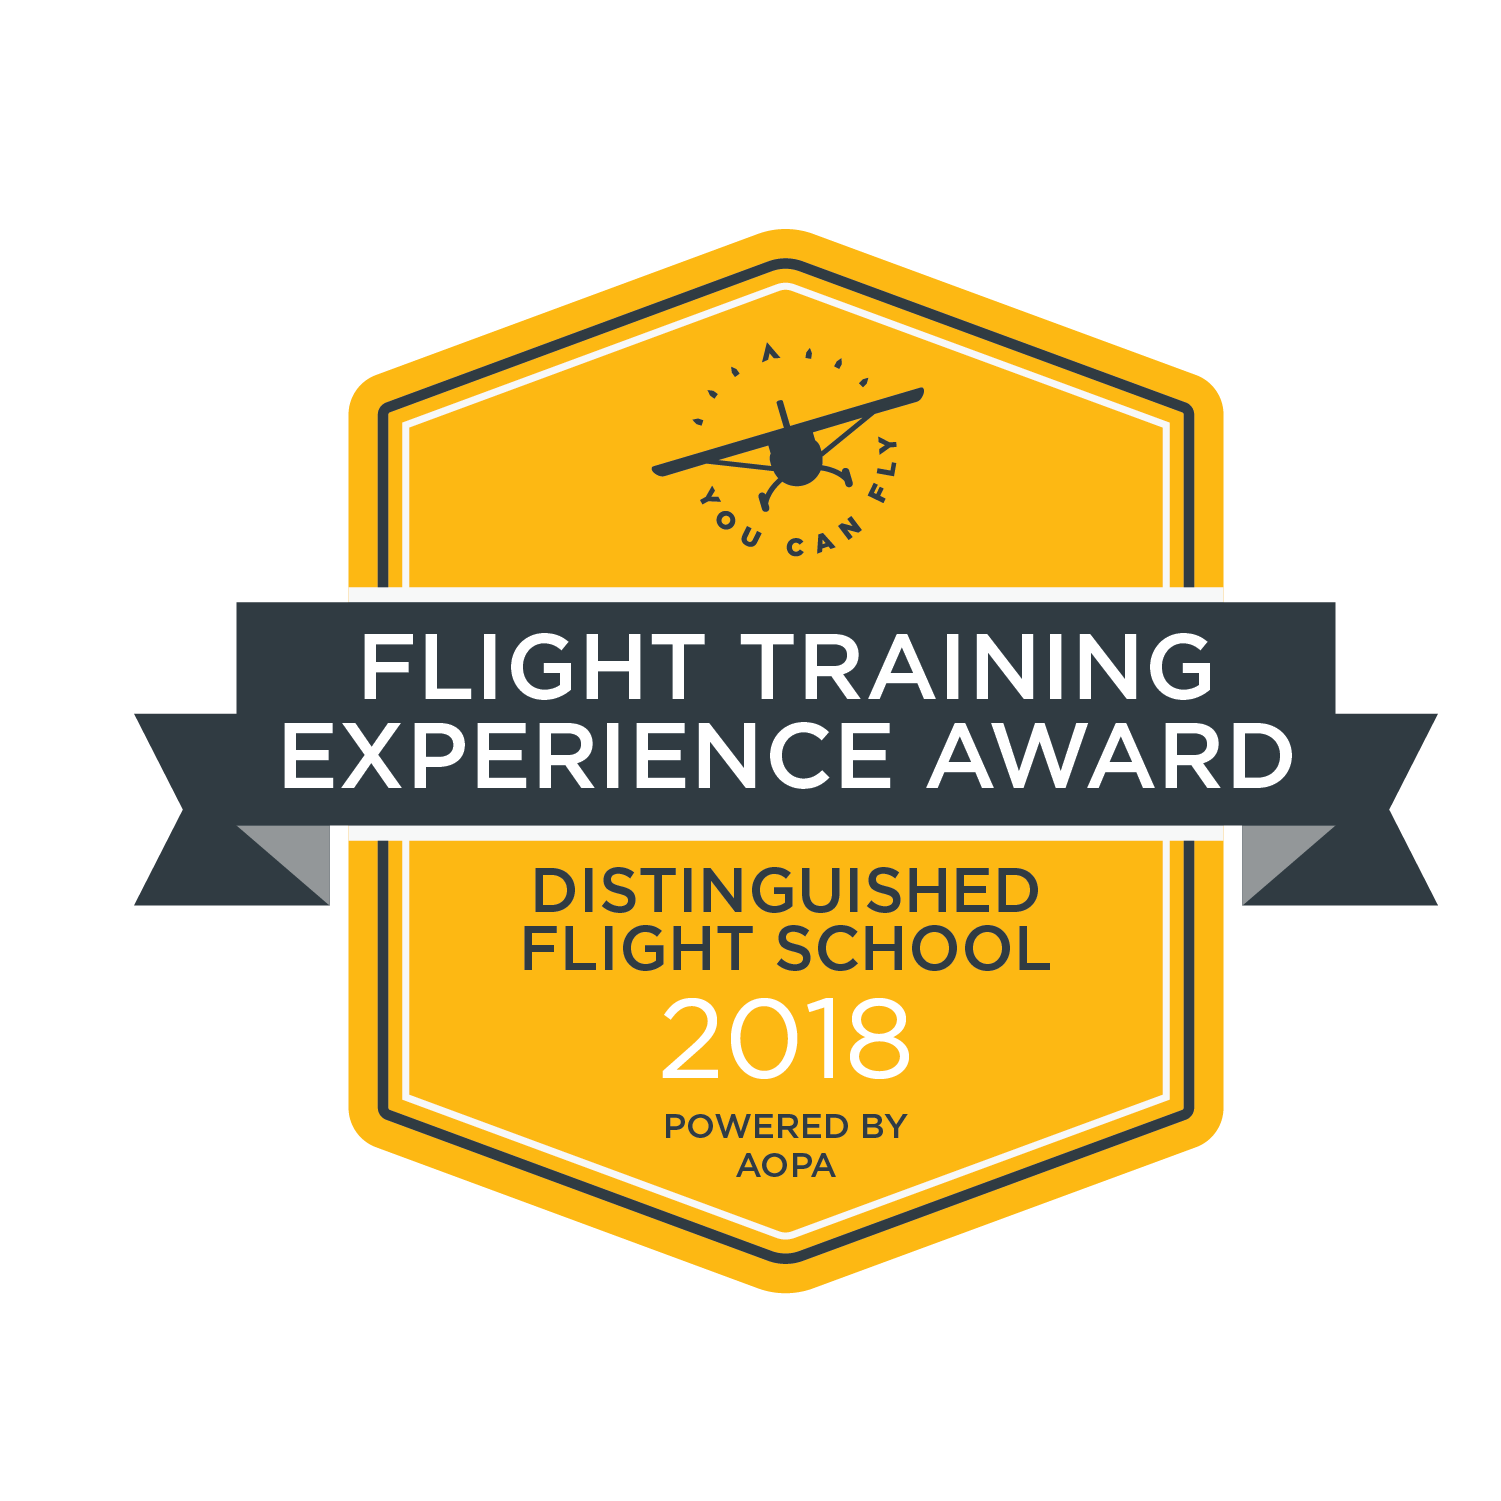 AOPA Awarded Code 1 Flight Training "Distinguished Flight School " for 2019